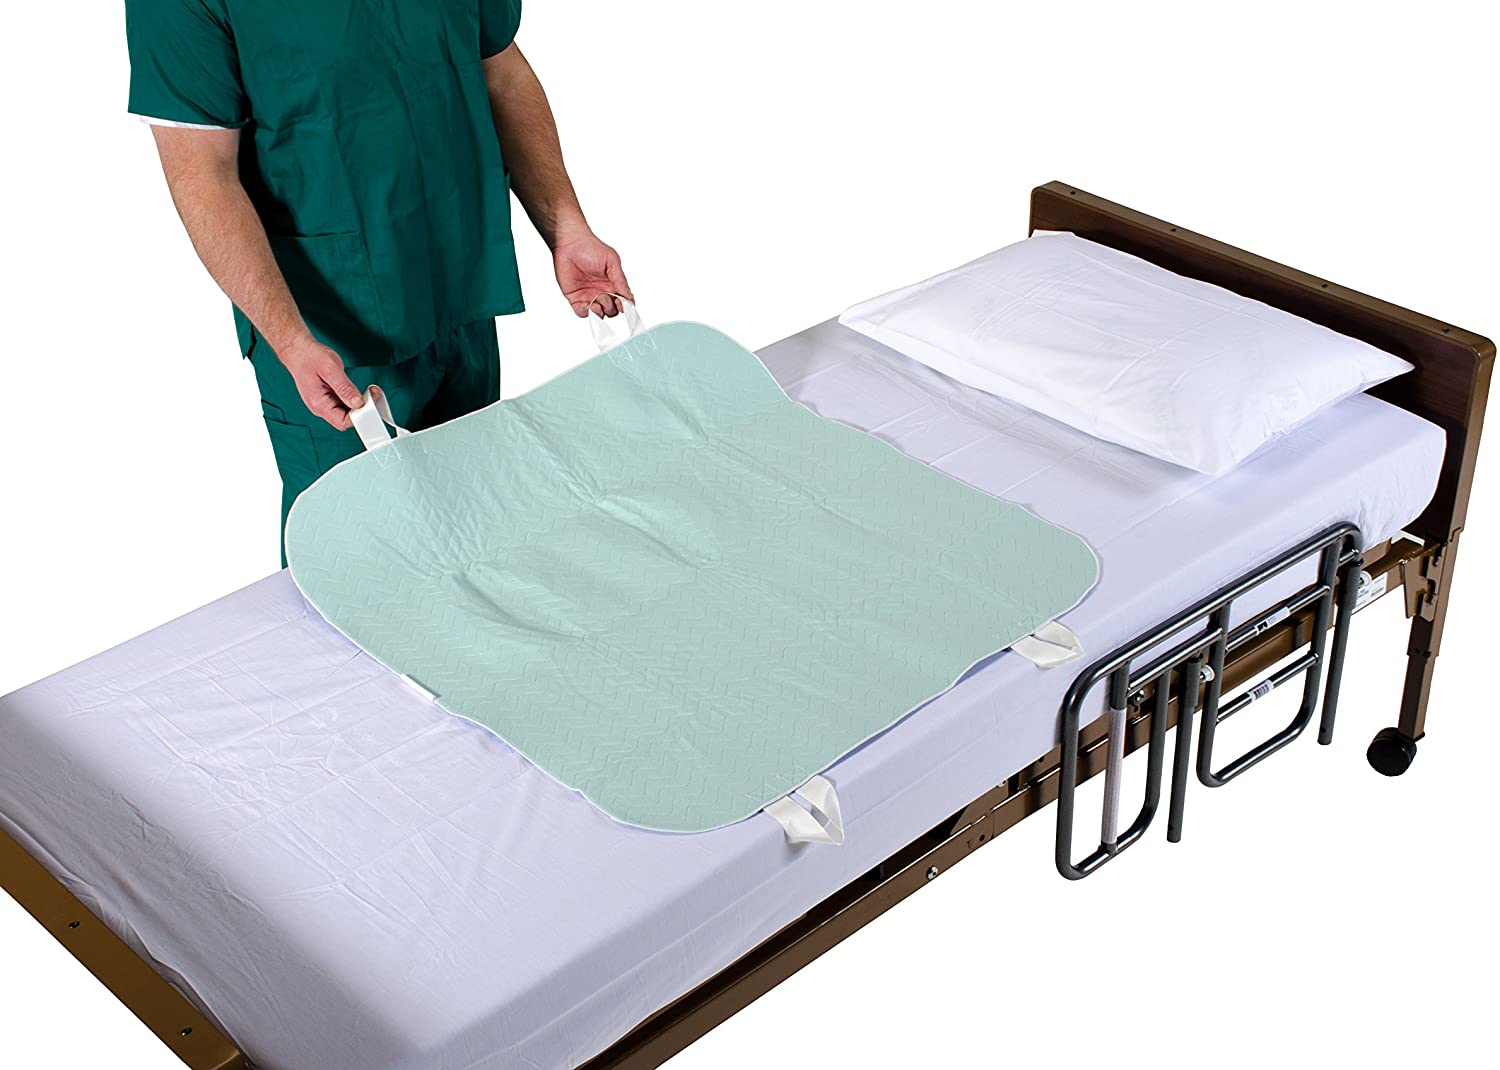 waterproof mattress pad for a hospital